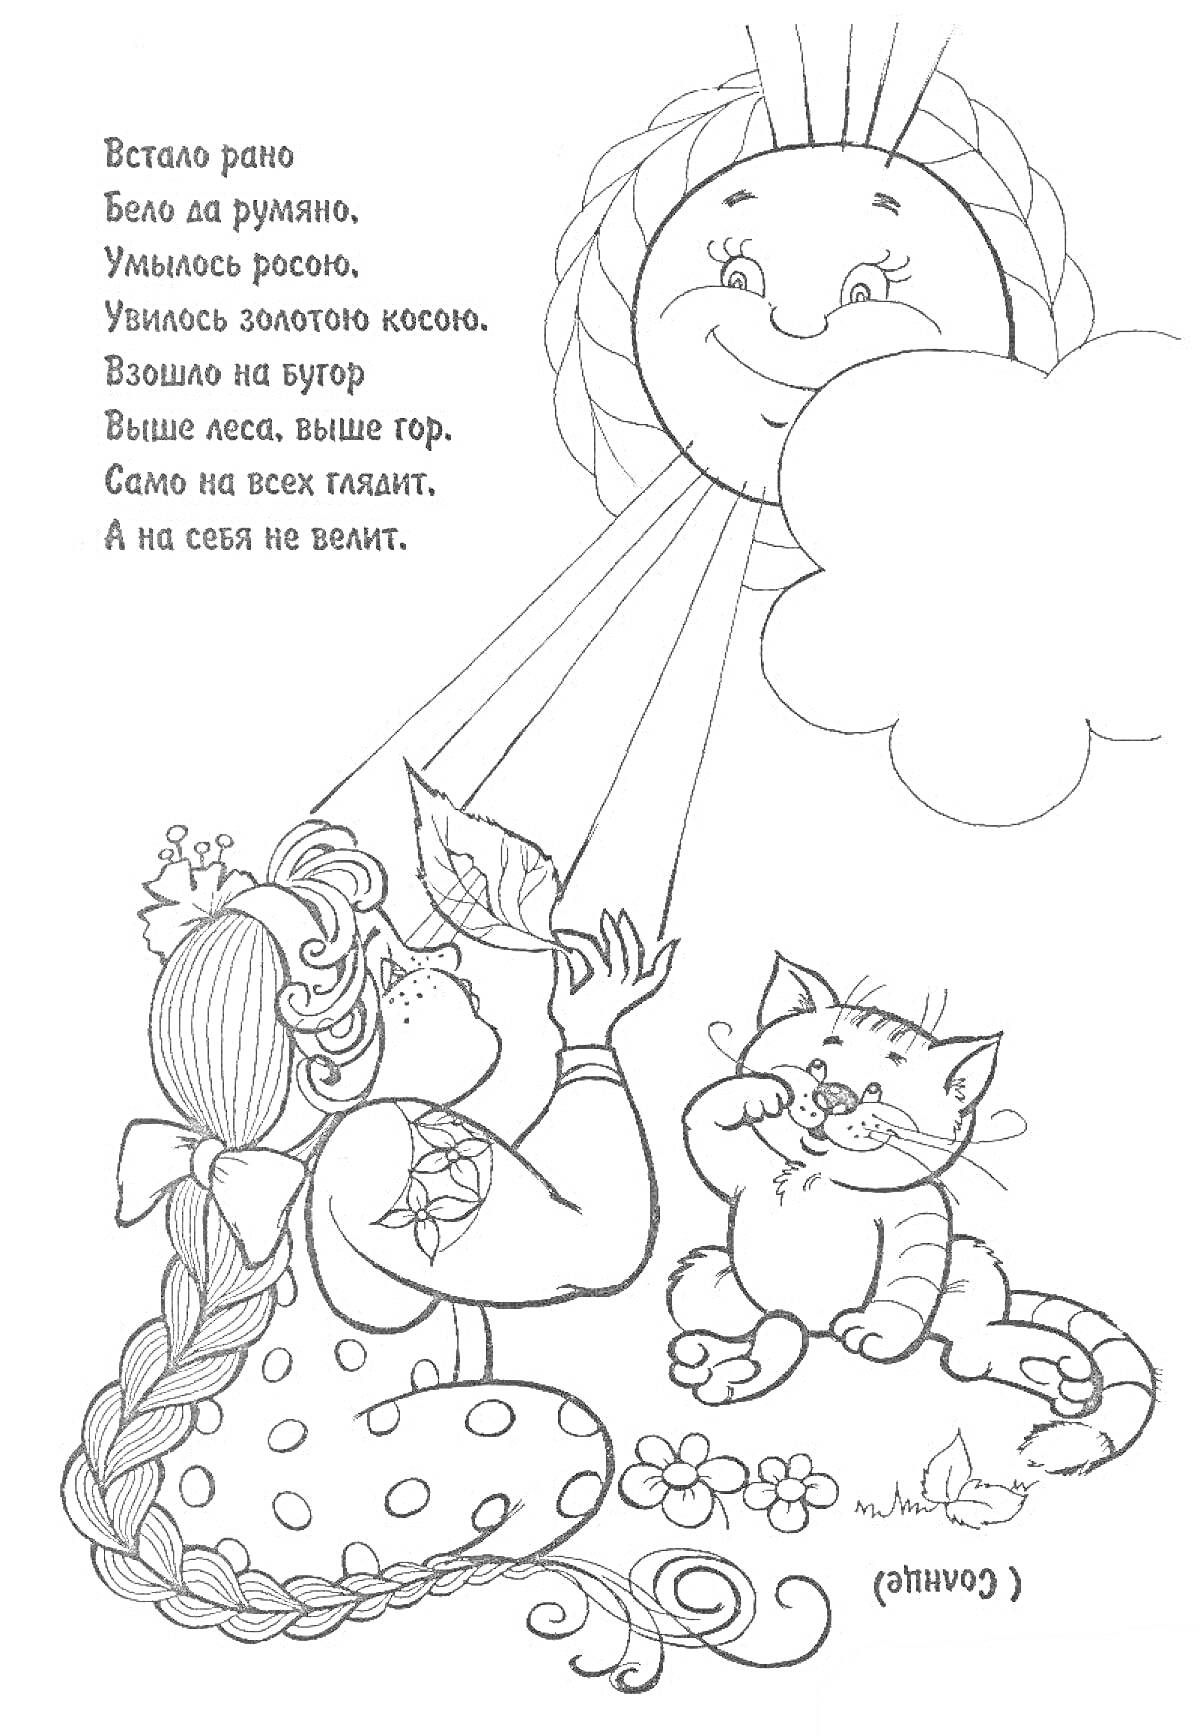 Раскраска Девочка с косичками смотрит на солнце, держит лист, рядом сидит котенок, загадка про солнце